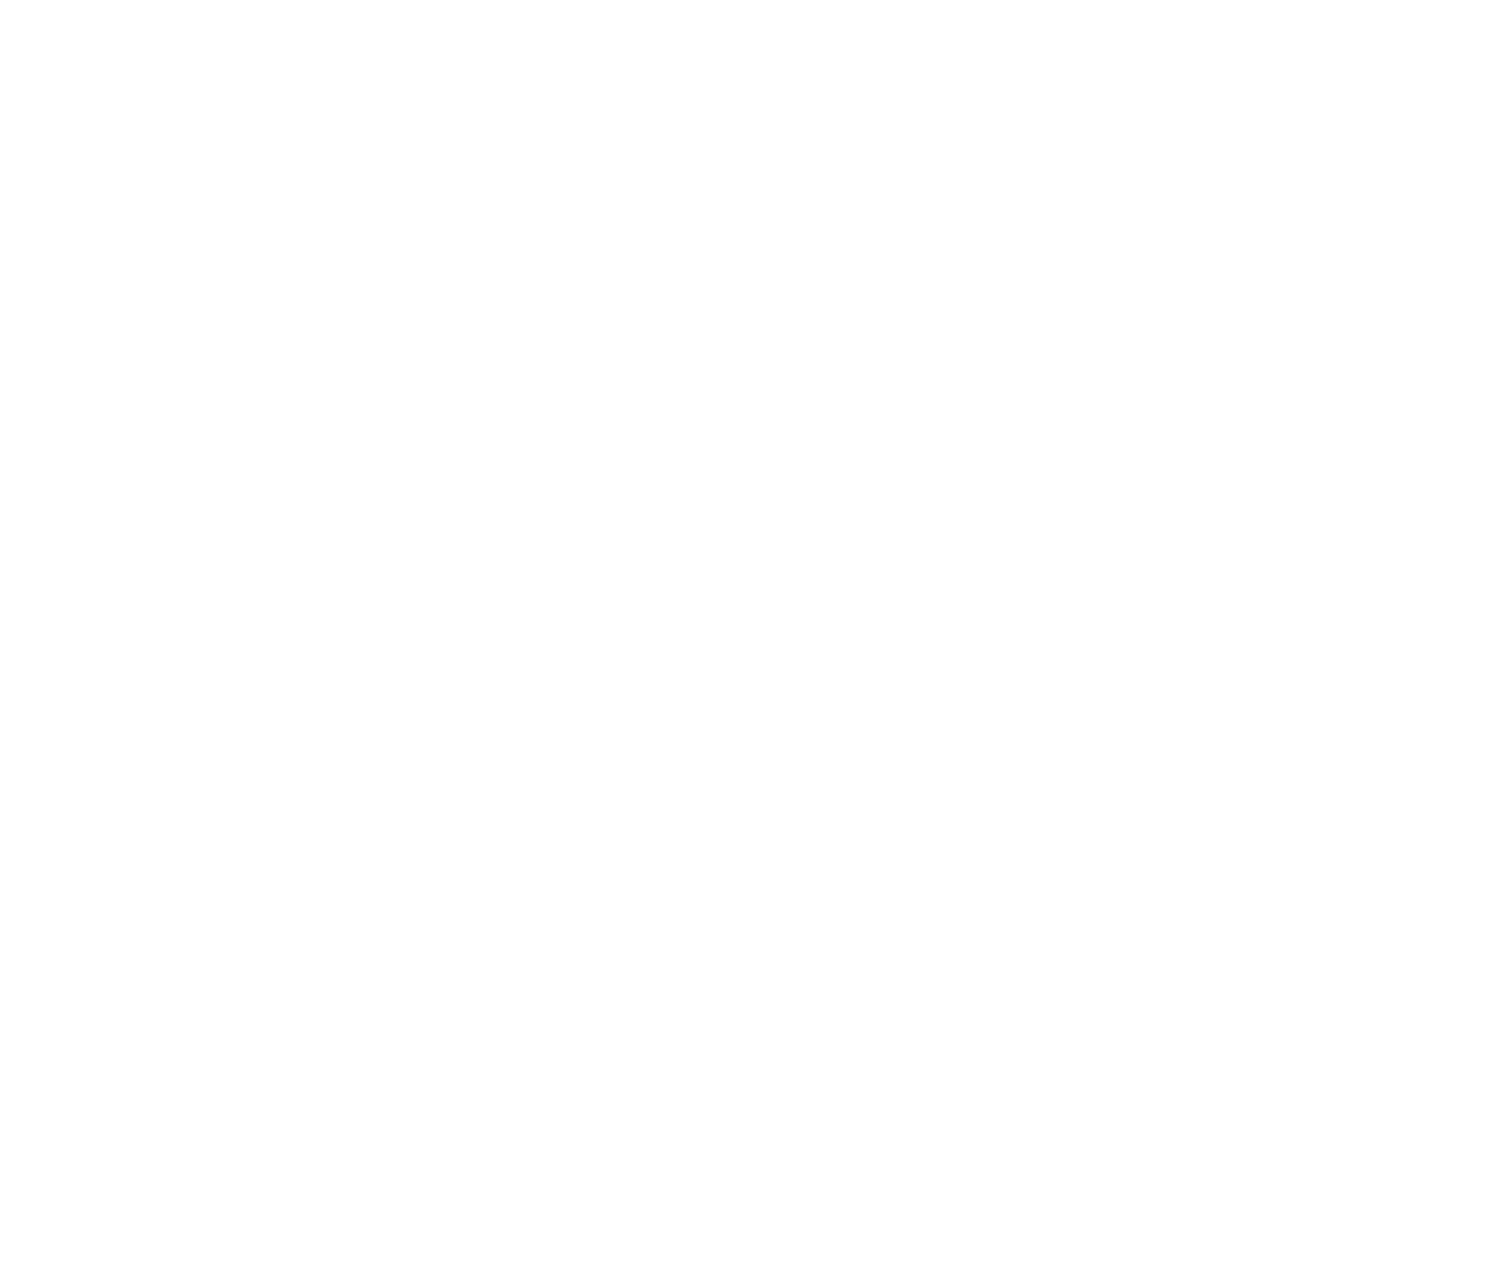 EJ Henderson Guitars and Ukuleles